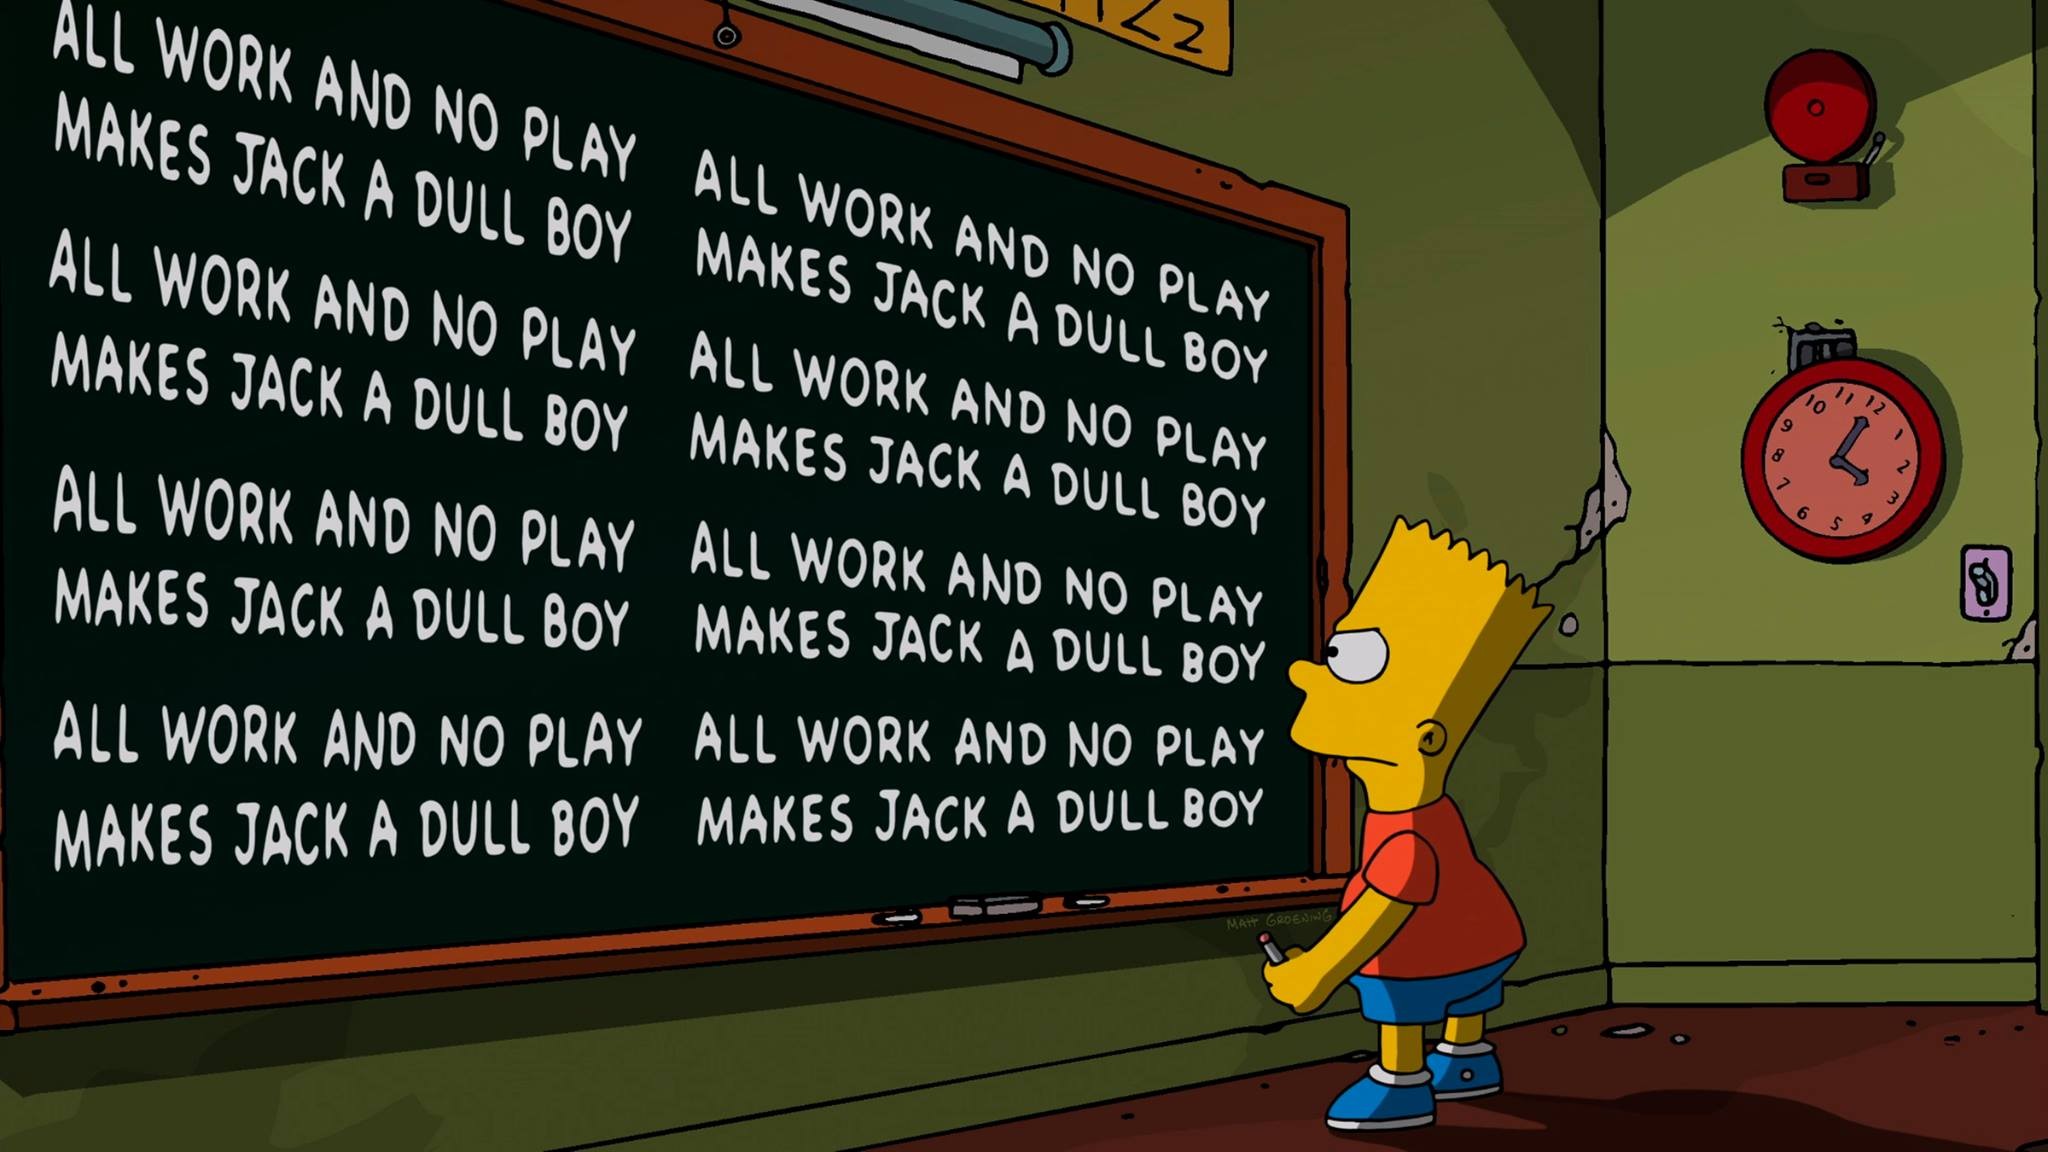 General 2048x1152 The Simpsons Bart Simpson chalkboard cartoon humor The Shining TV series